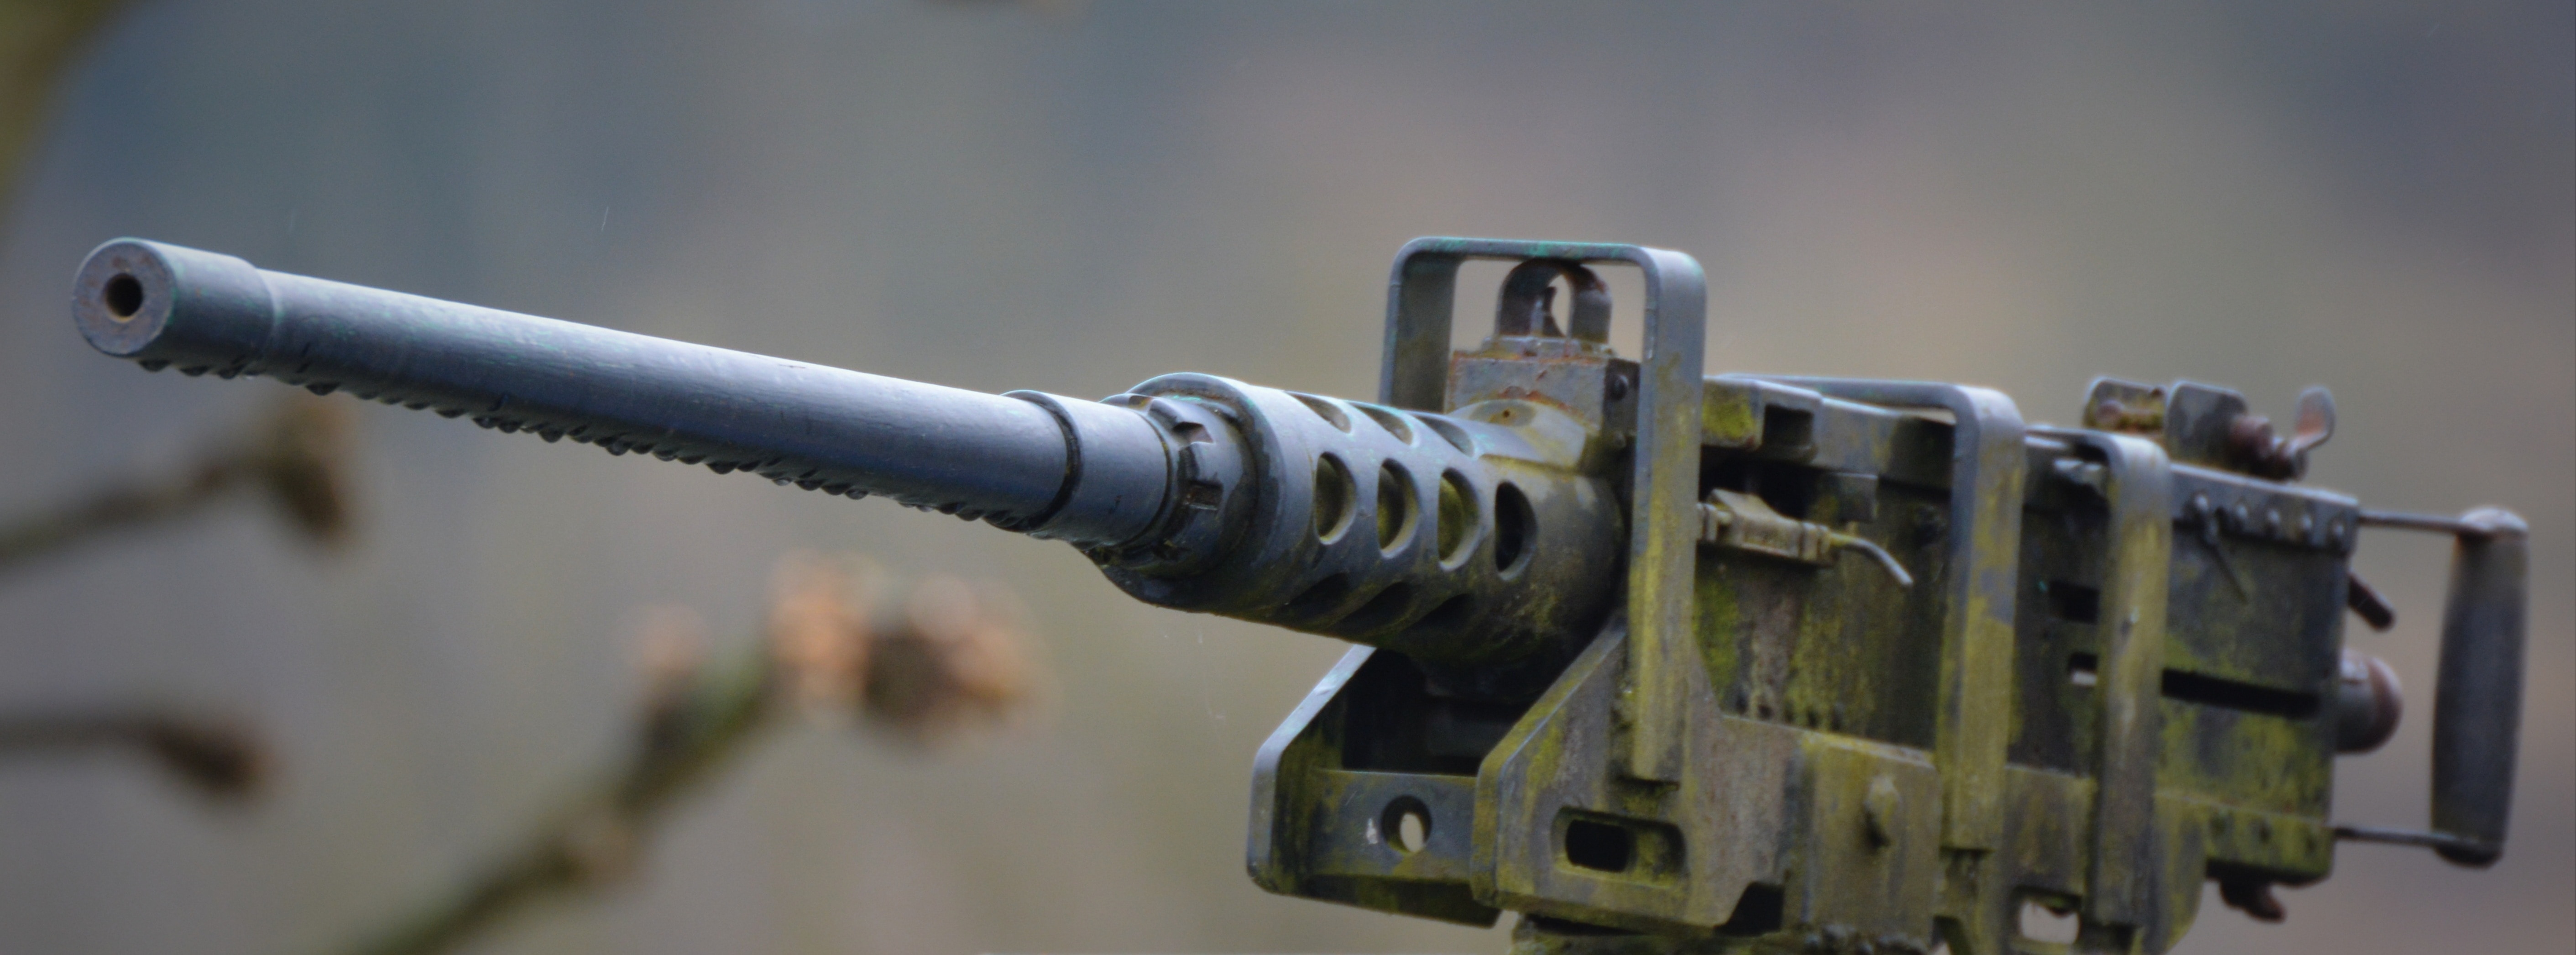 grey 50 calliber machine gun